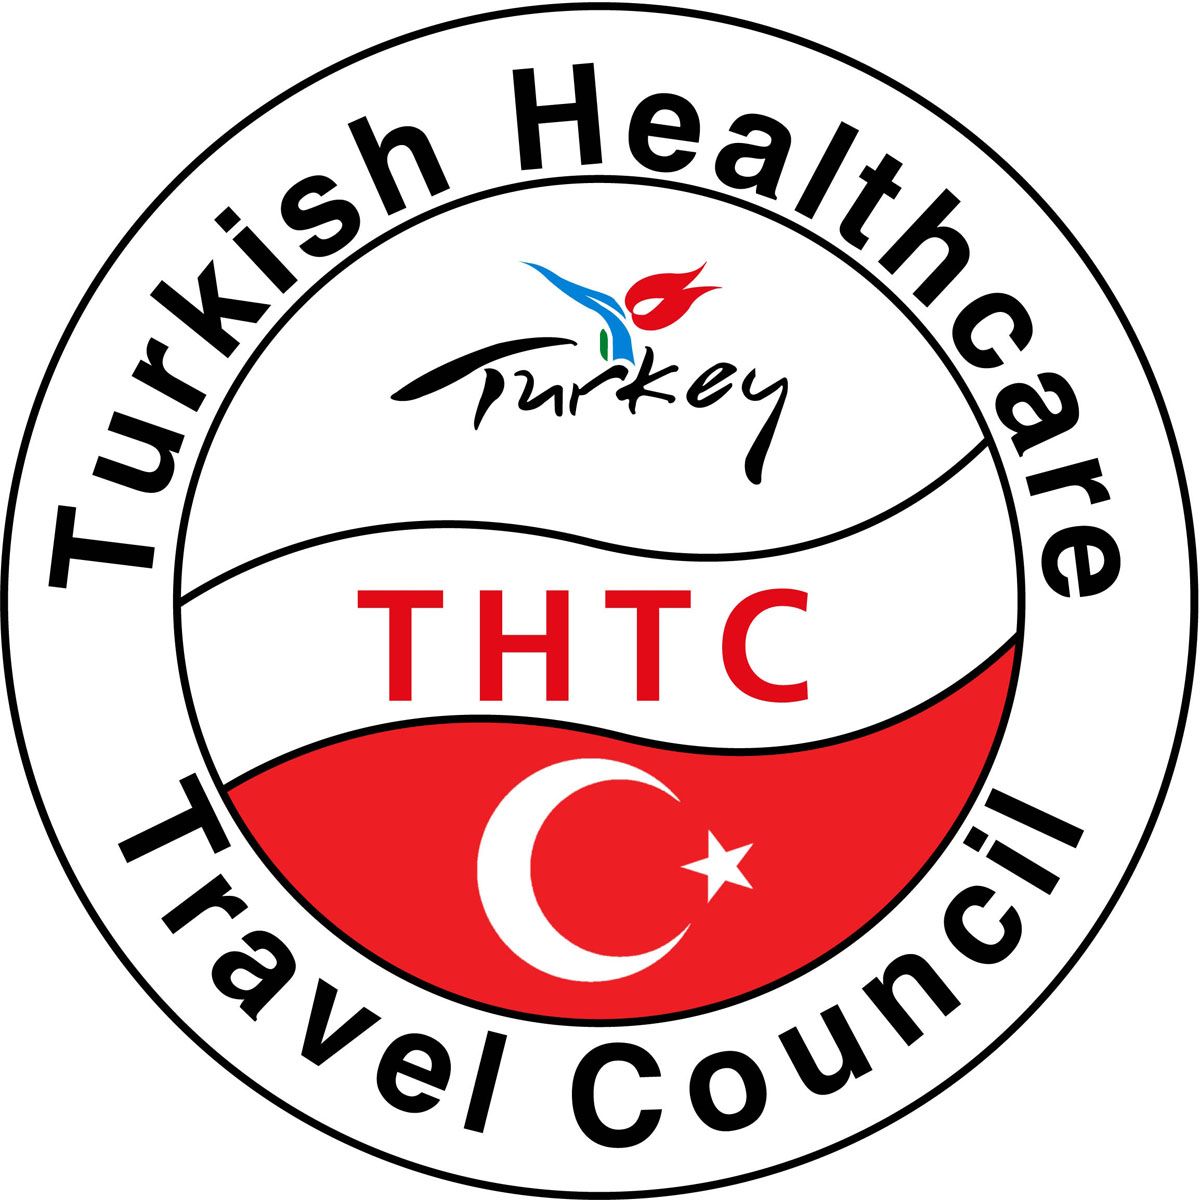 thtc-logo-son.jpg